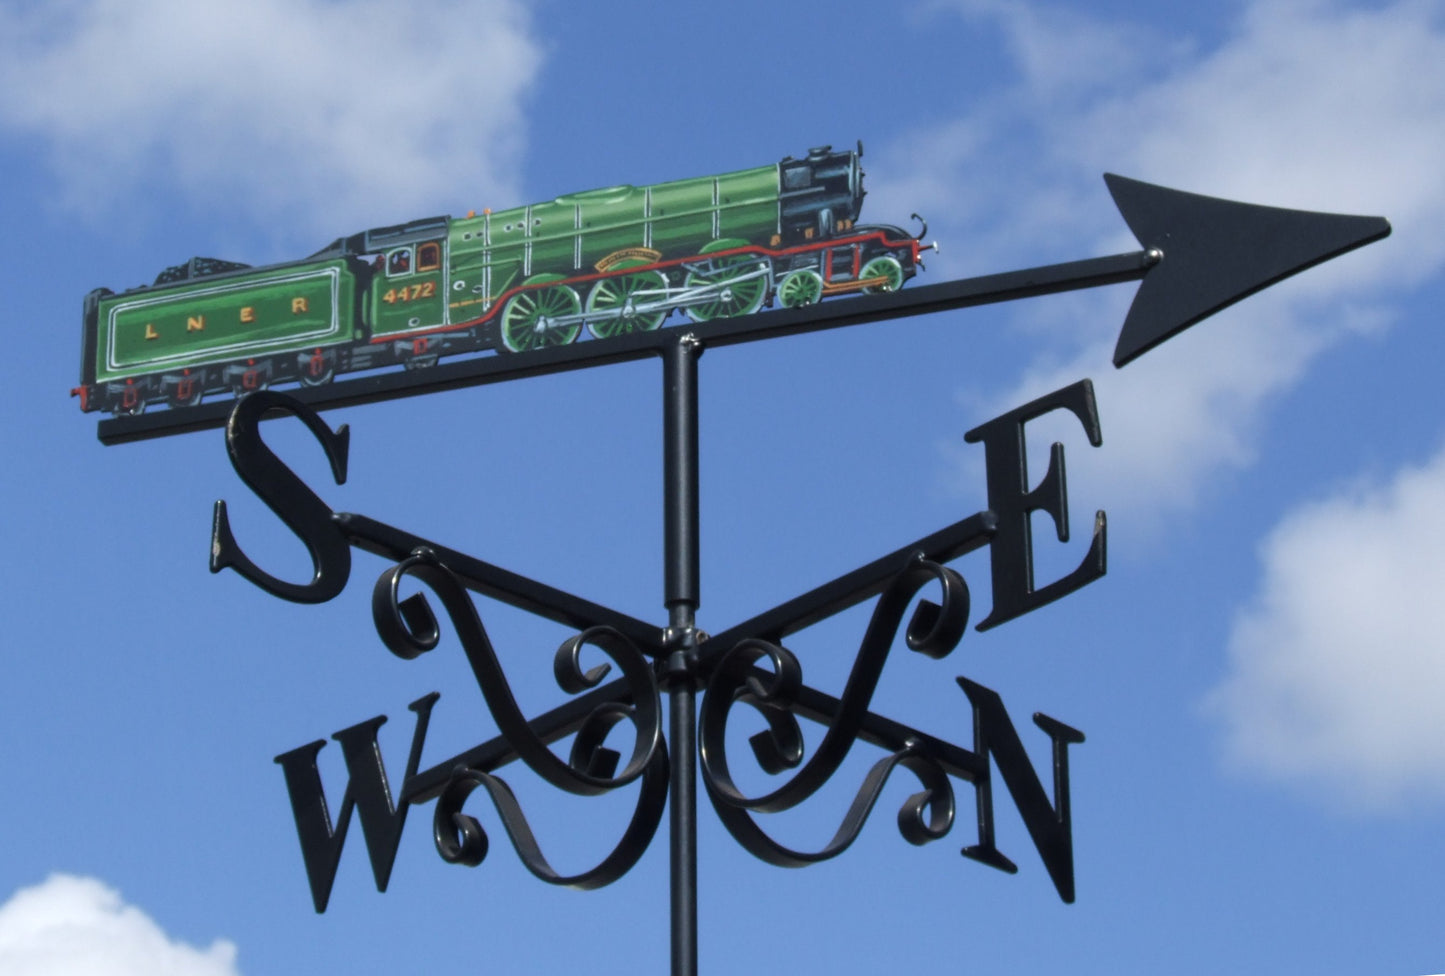 Flying Scotsman locomotive train weathervane painted